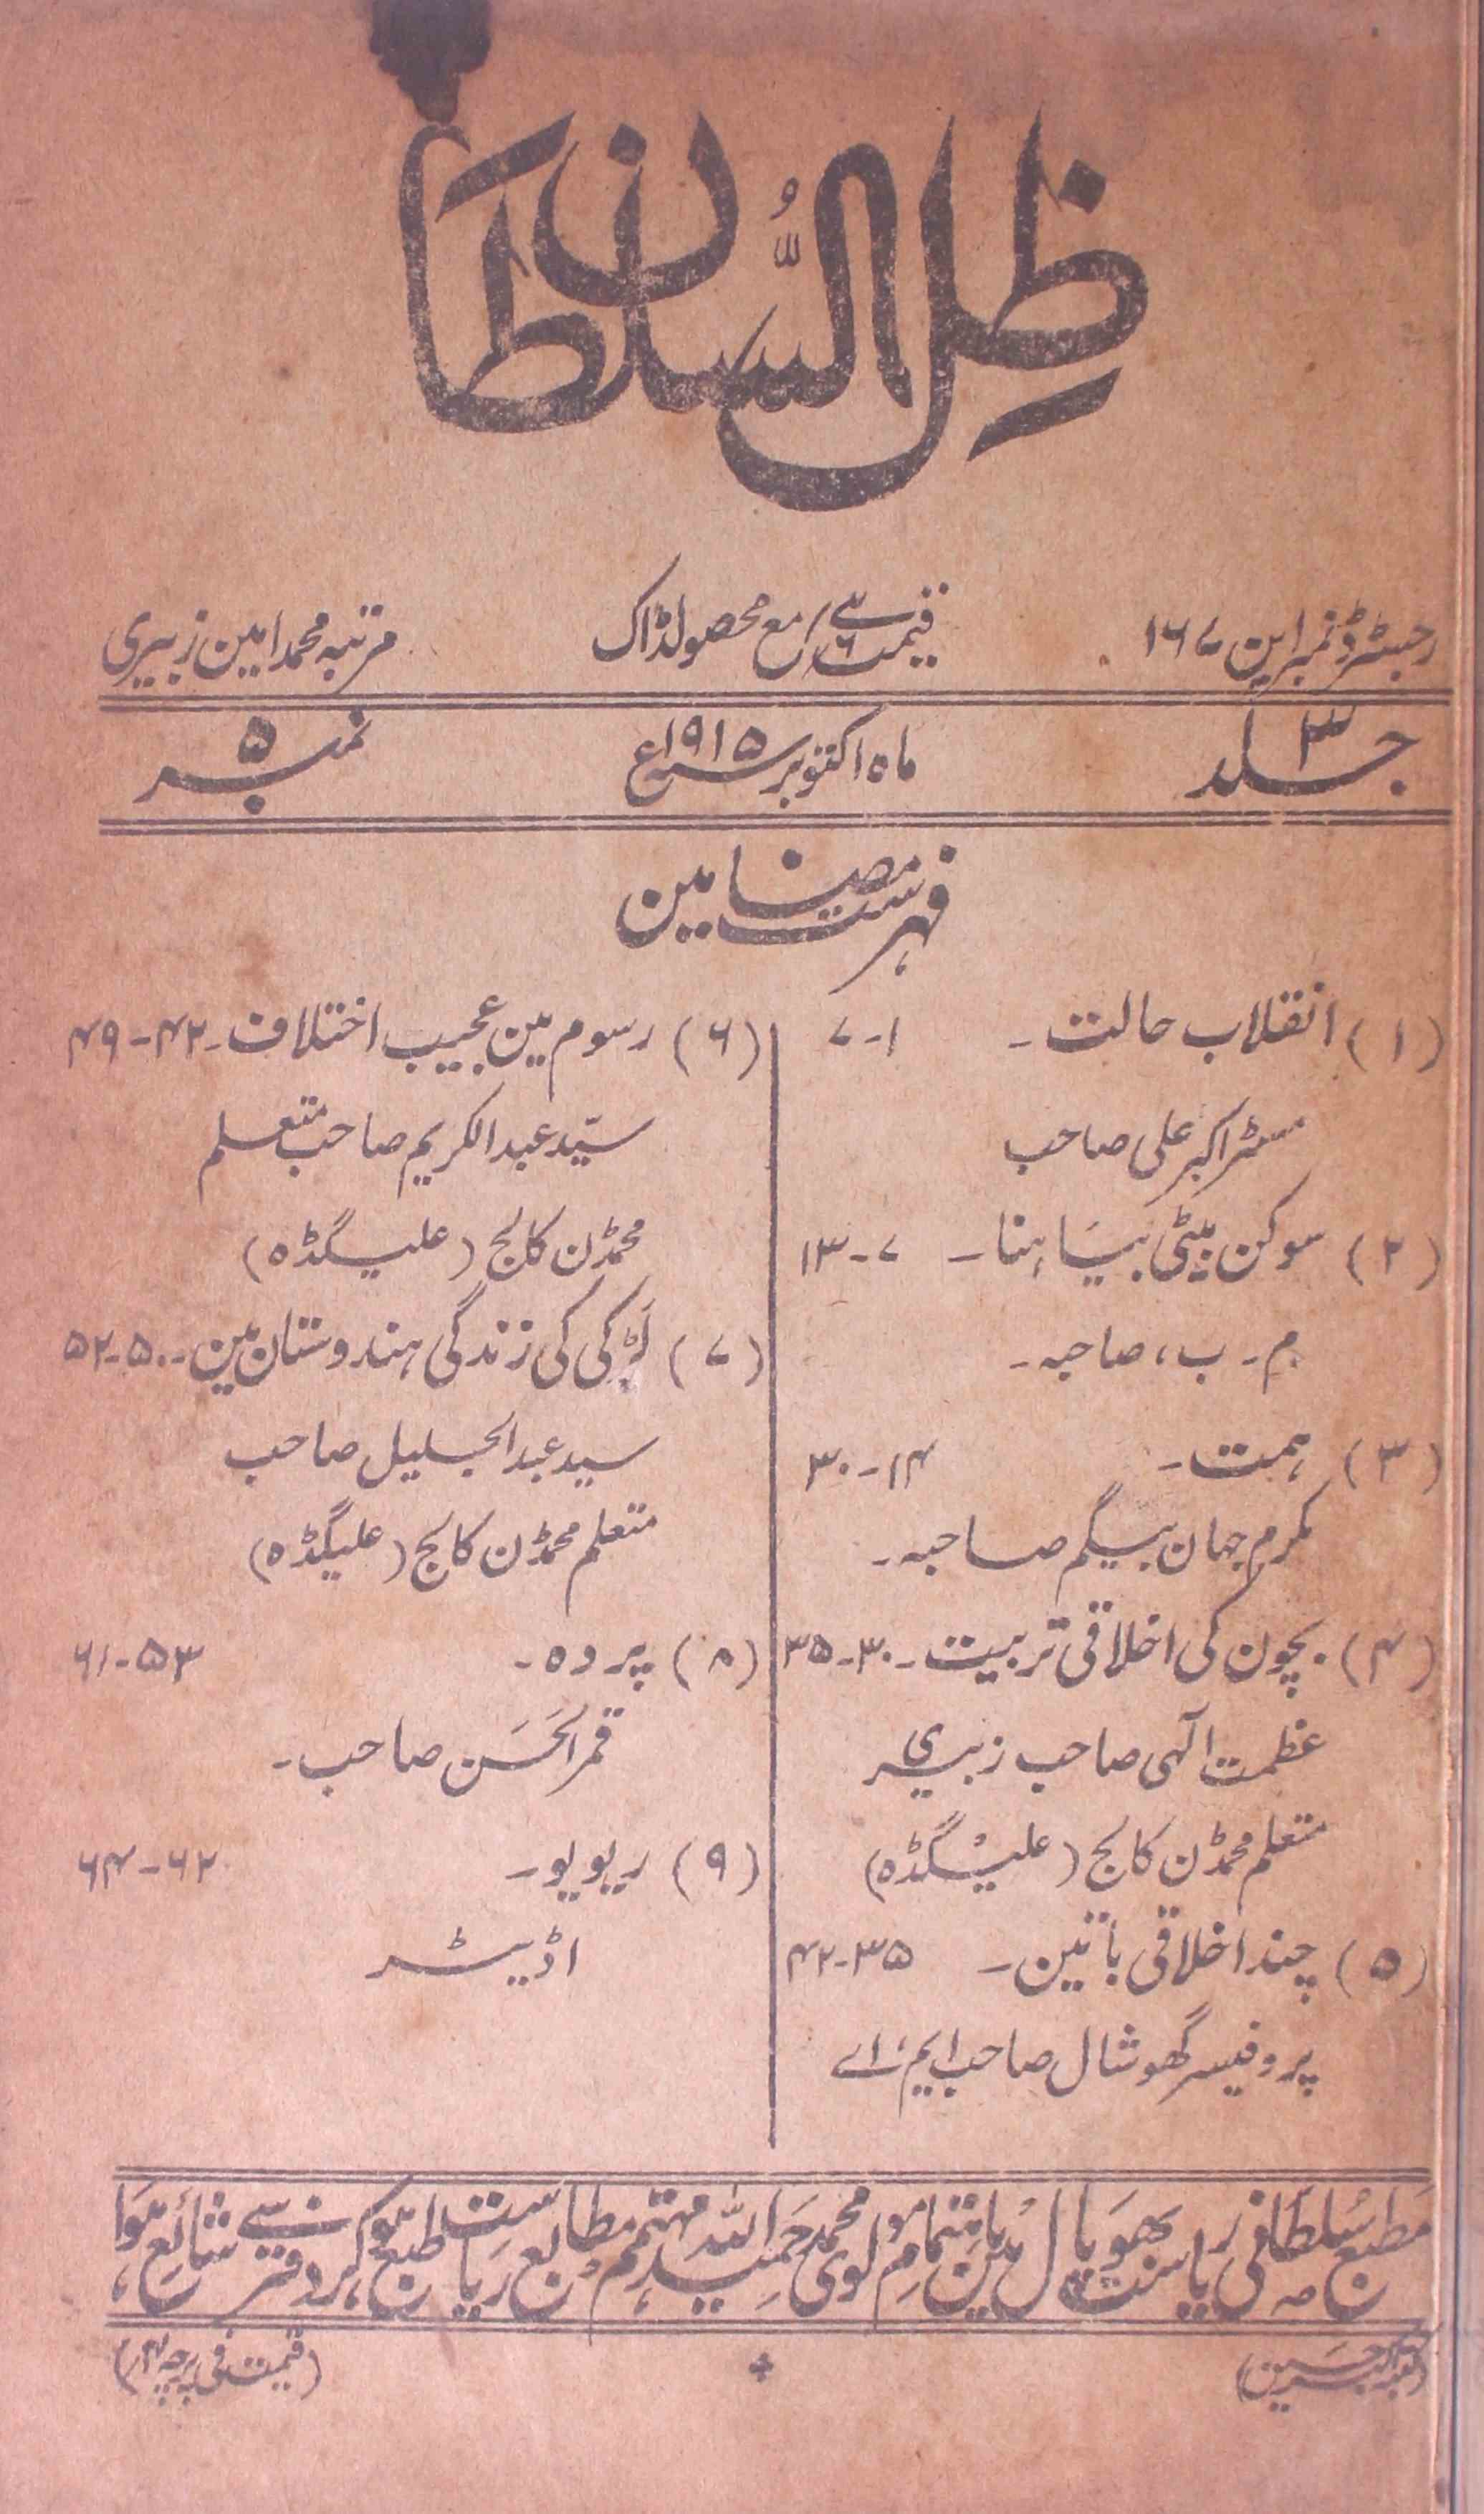 Zillus Sultan Jild 3 No. 5 - Oct. 1915-Shumara Number-005